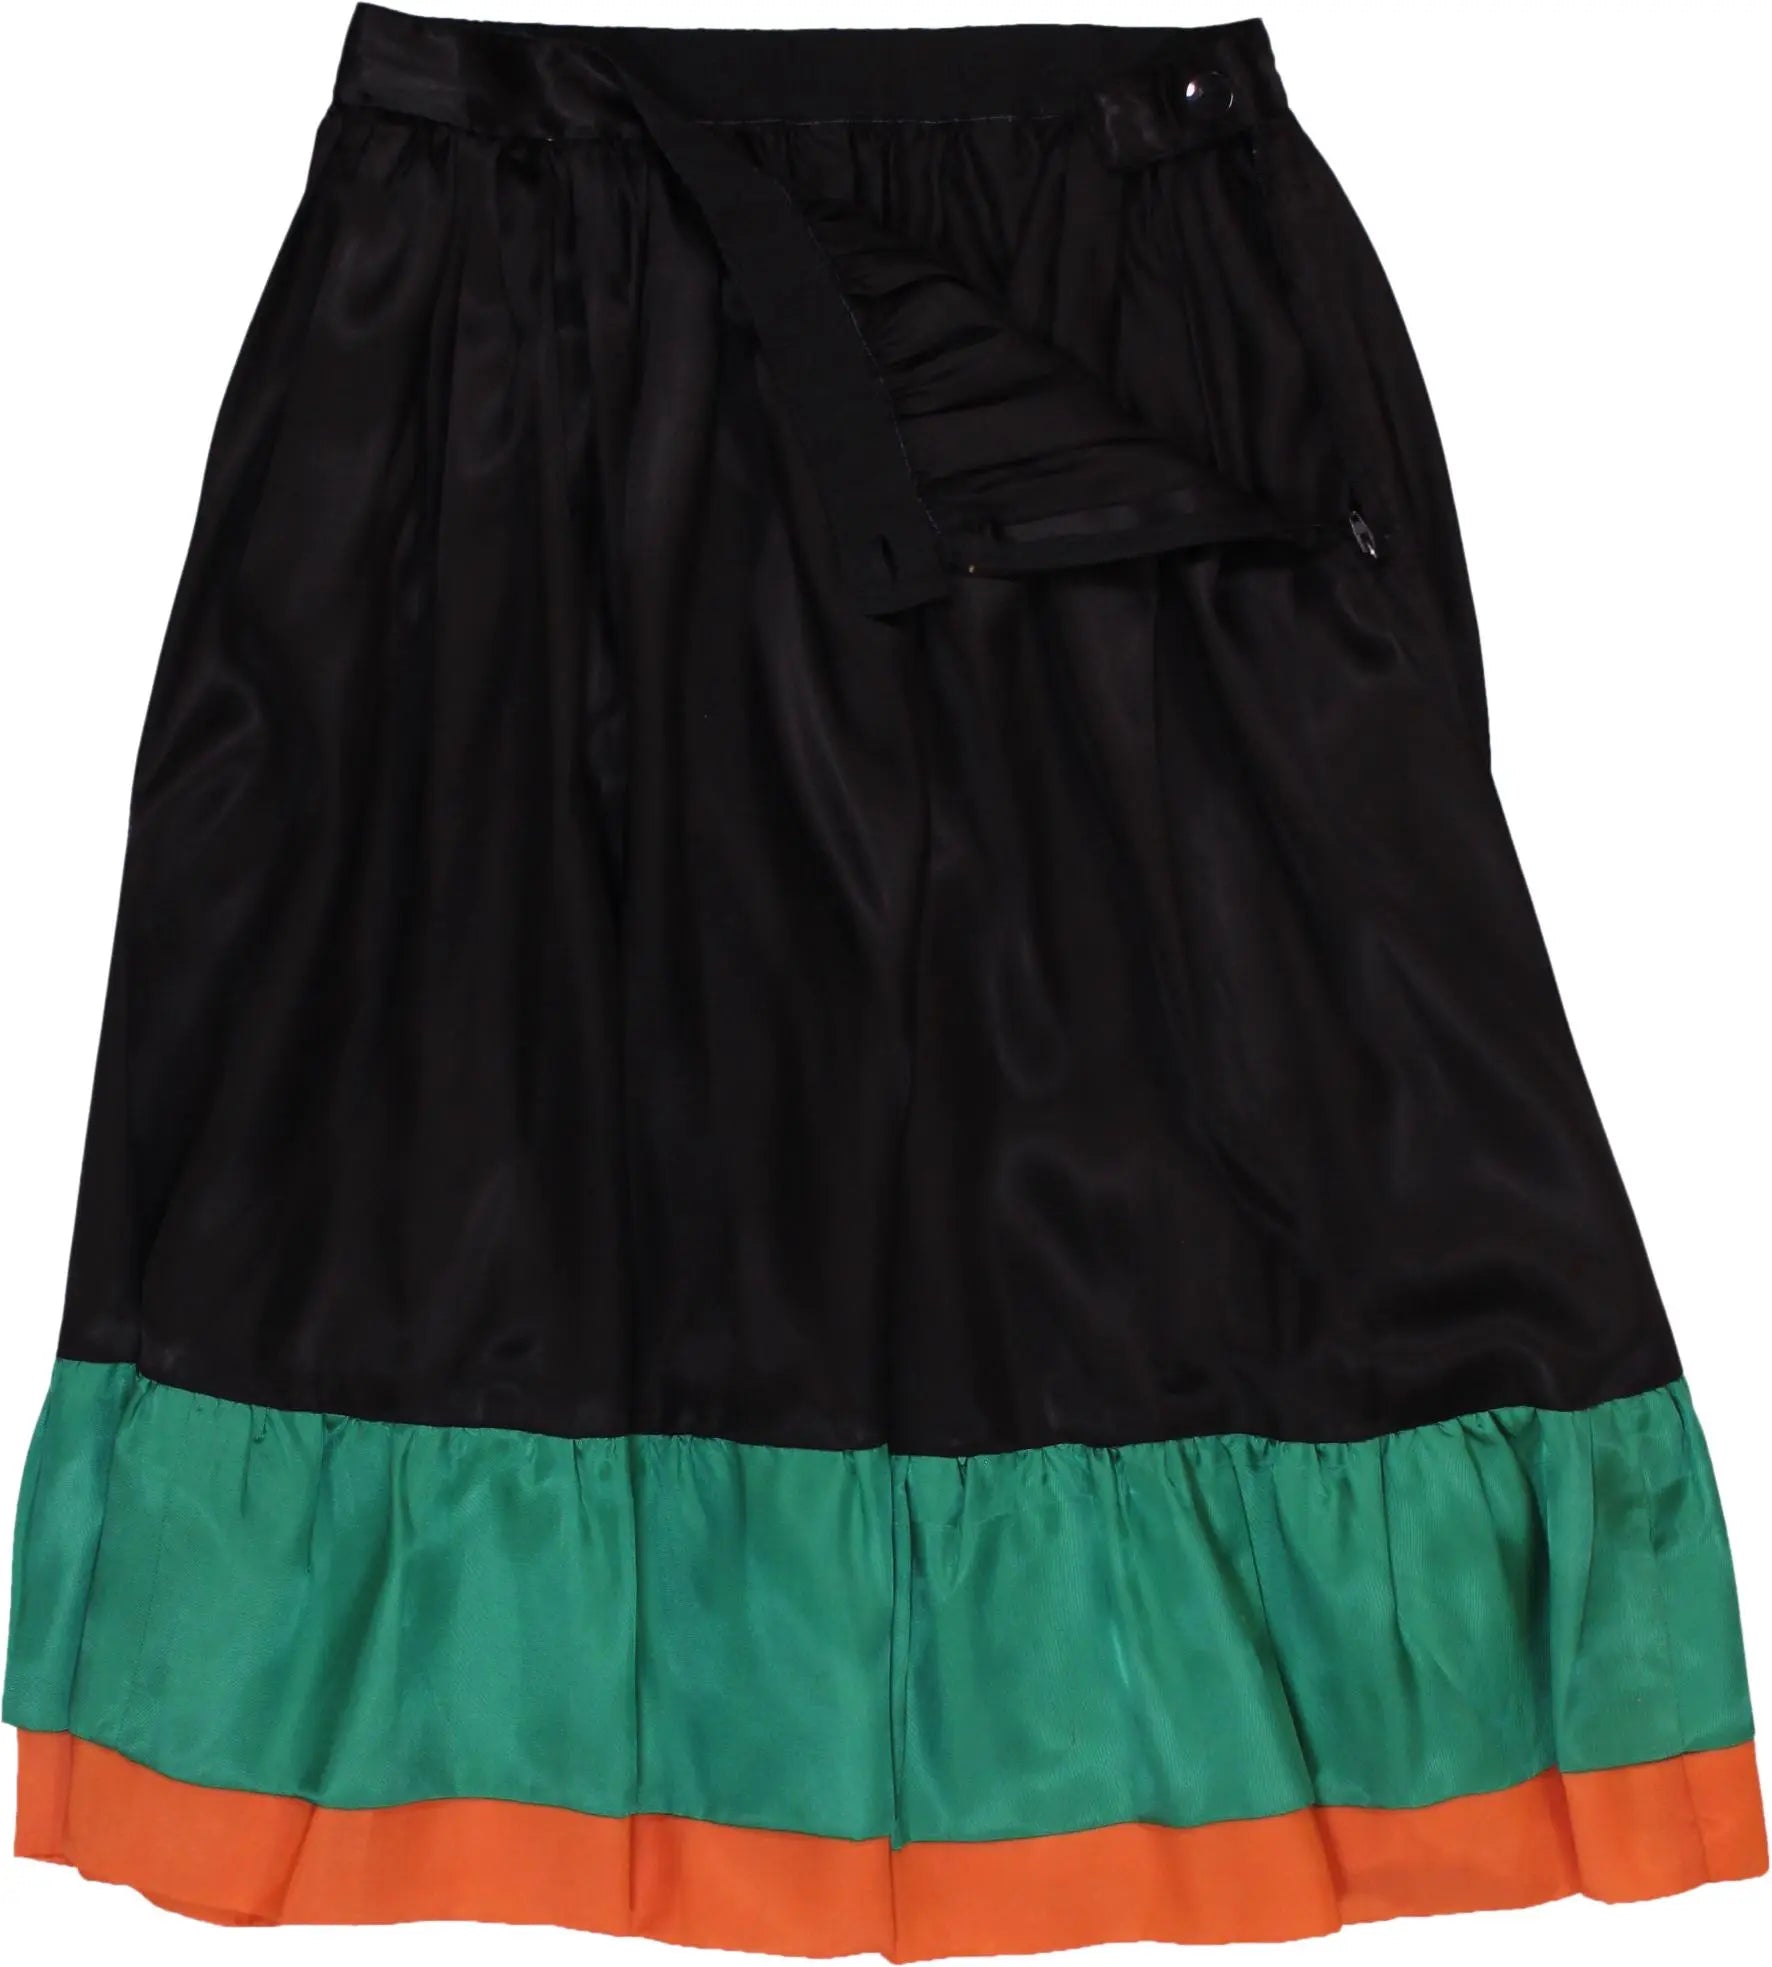 Handmade - Handmade Flared Skirt- ThriftTale.com - Vintage and second handclothing